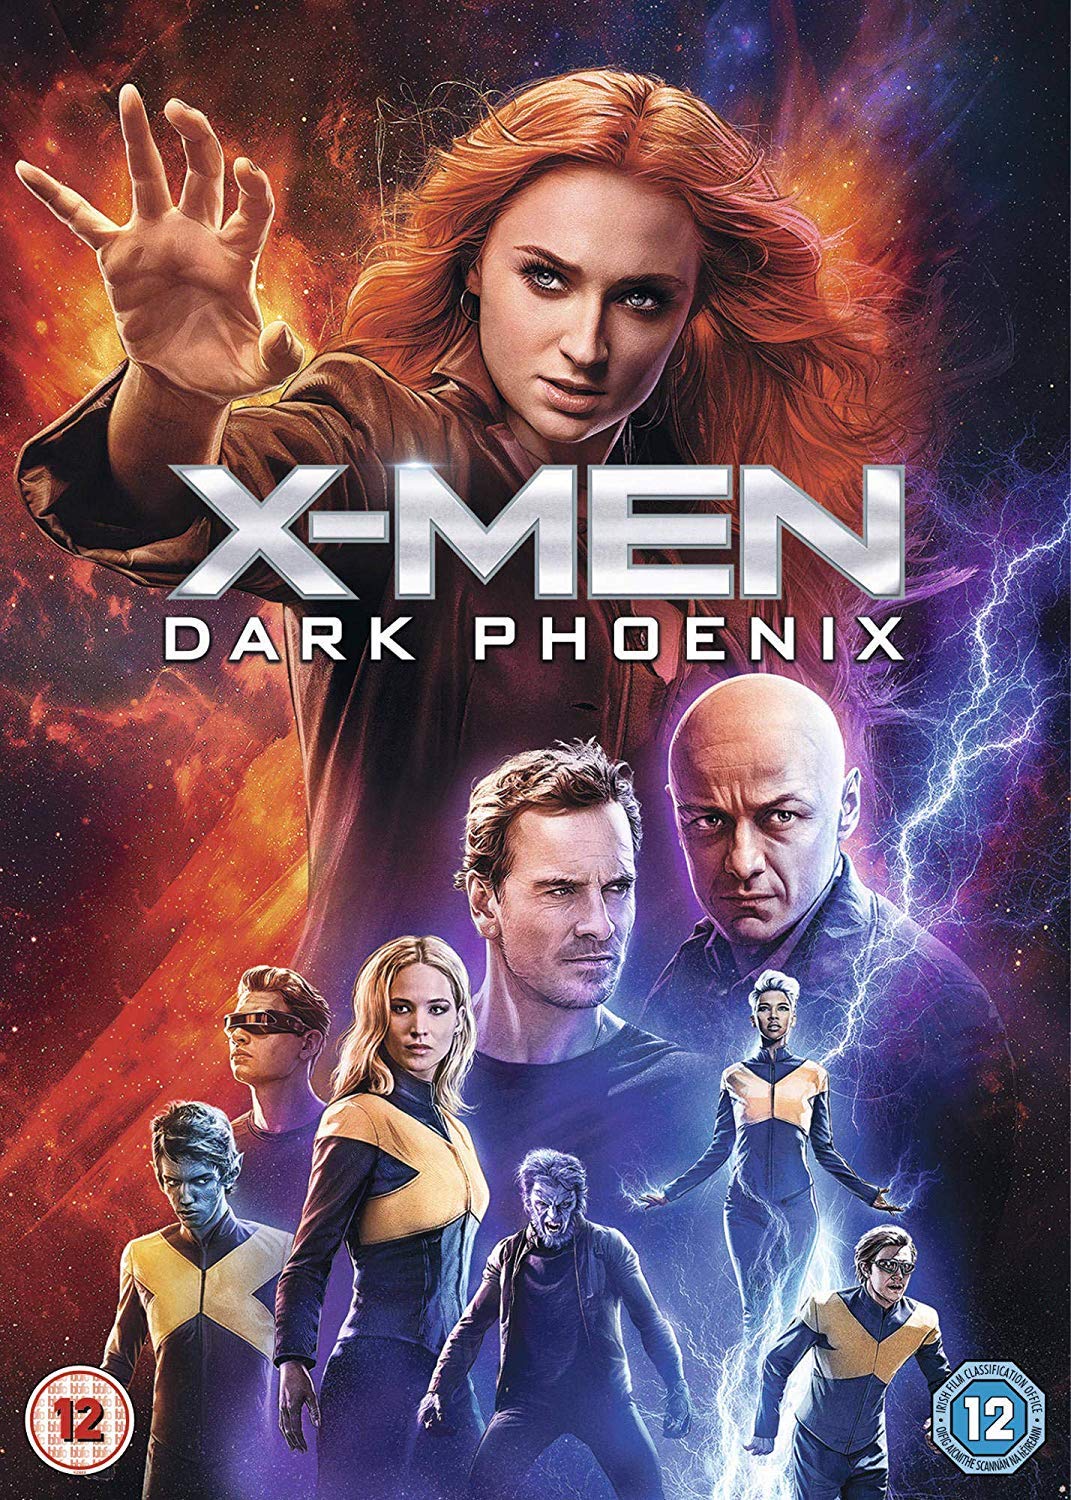 Jessica Chastain X-Men Dark Phoenix Poster Wallpapers